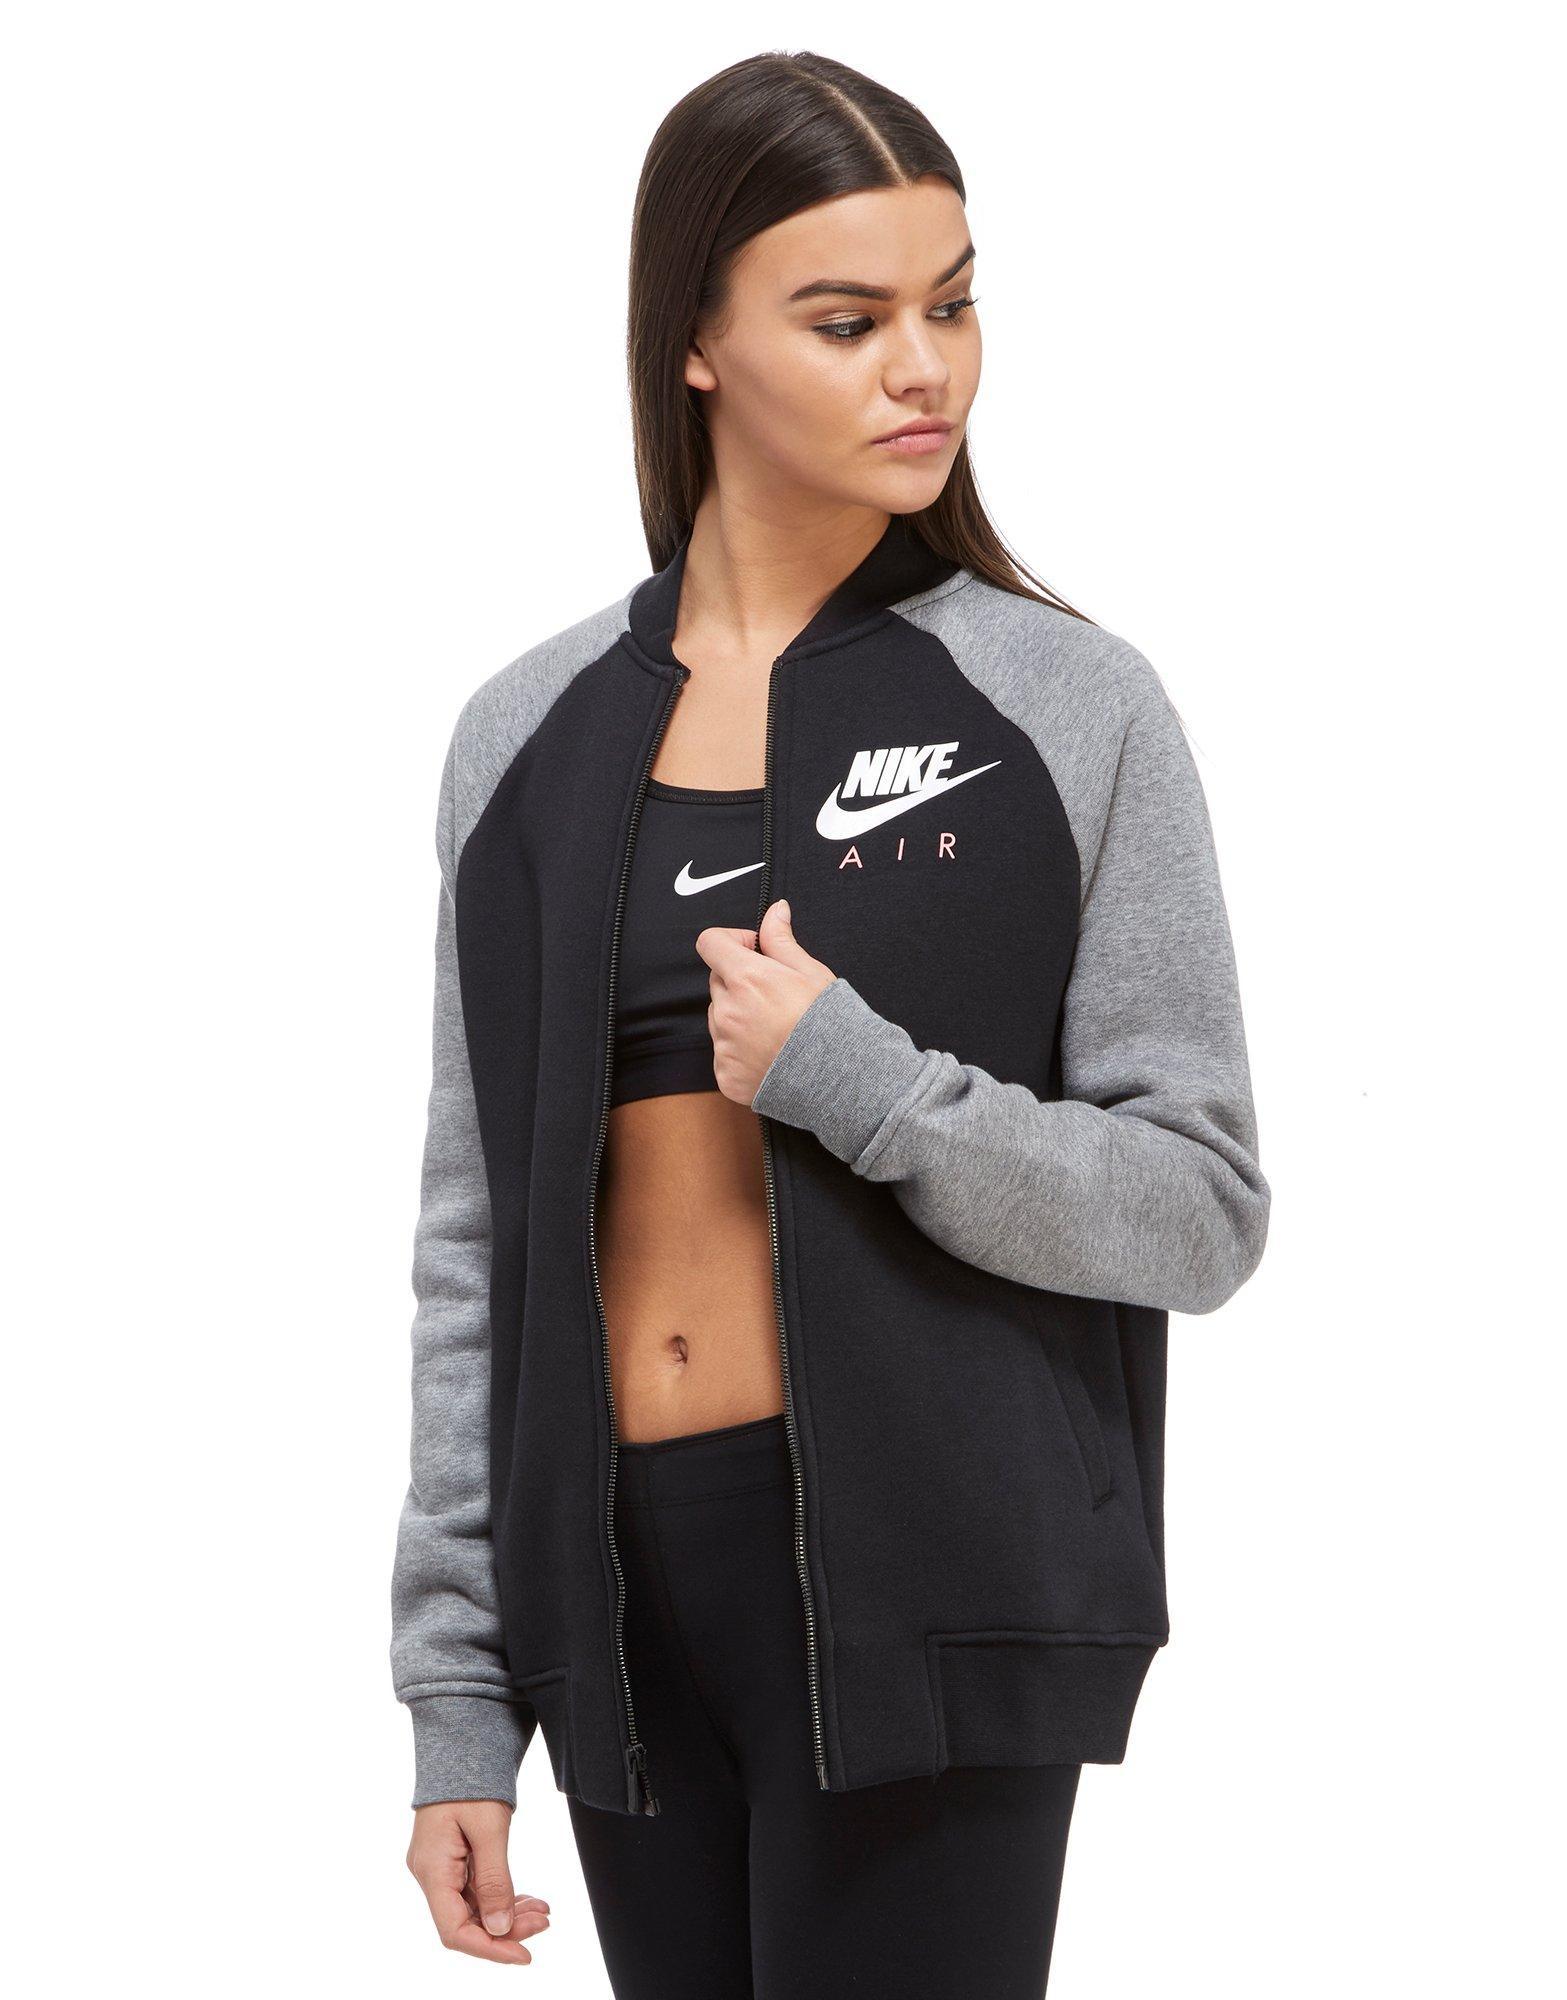 Nike Cotton Air Bomber Jacket in Black/Grey/Pink (Black) - Lyst